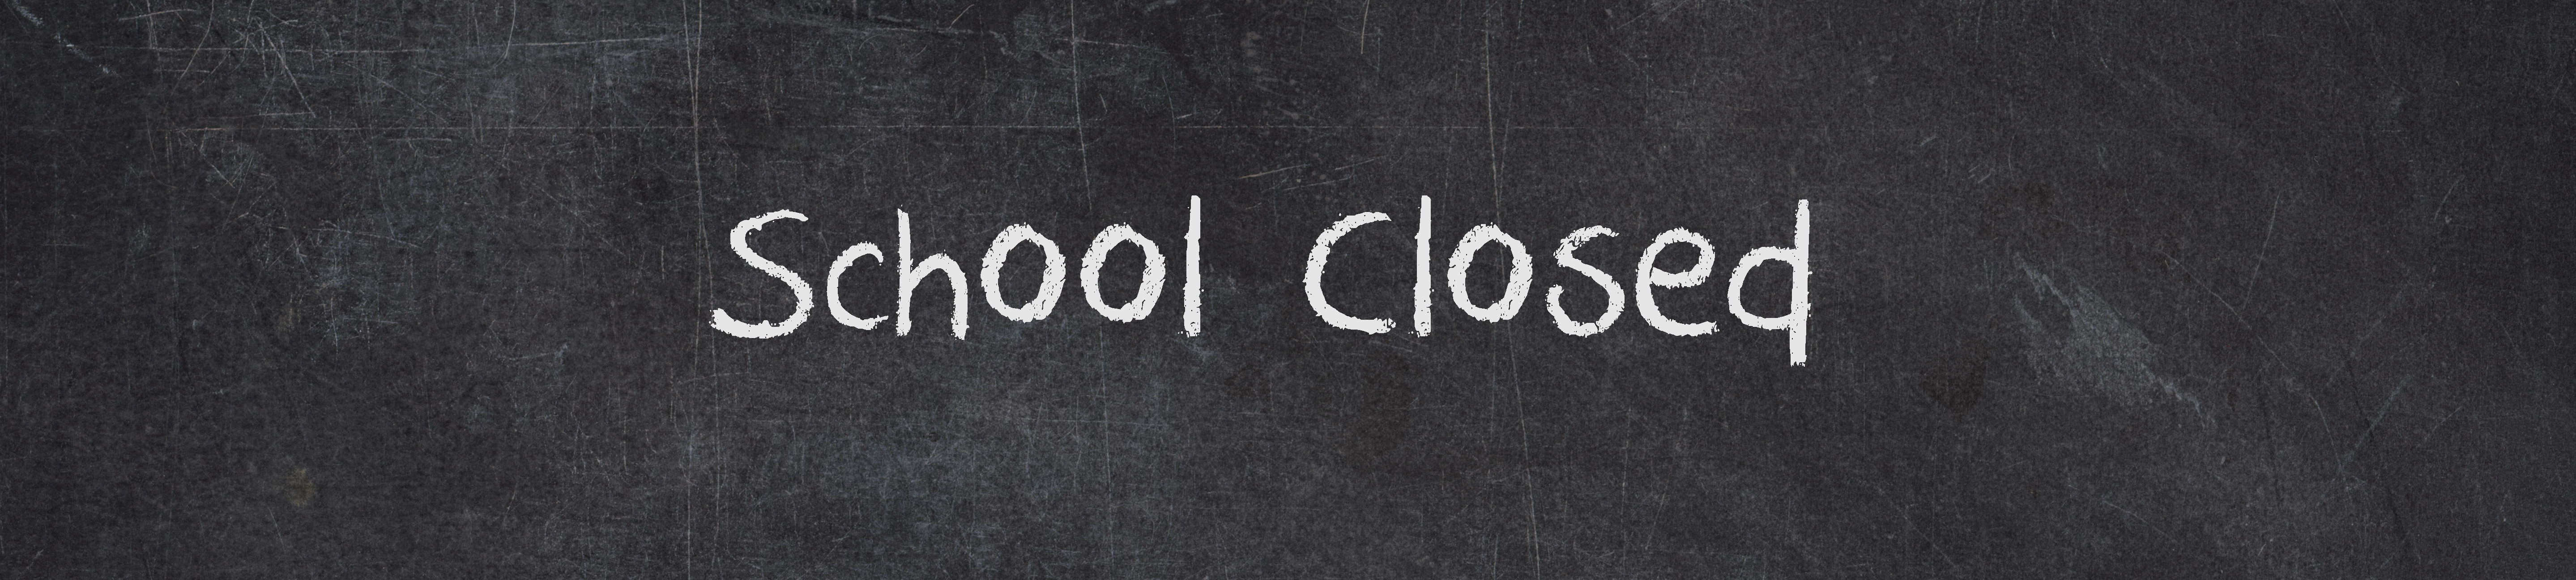 School closings tomorrow Images5756 x 1297